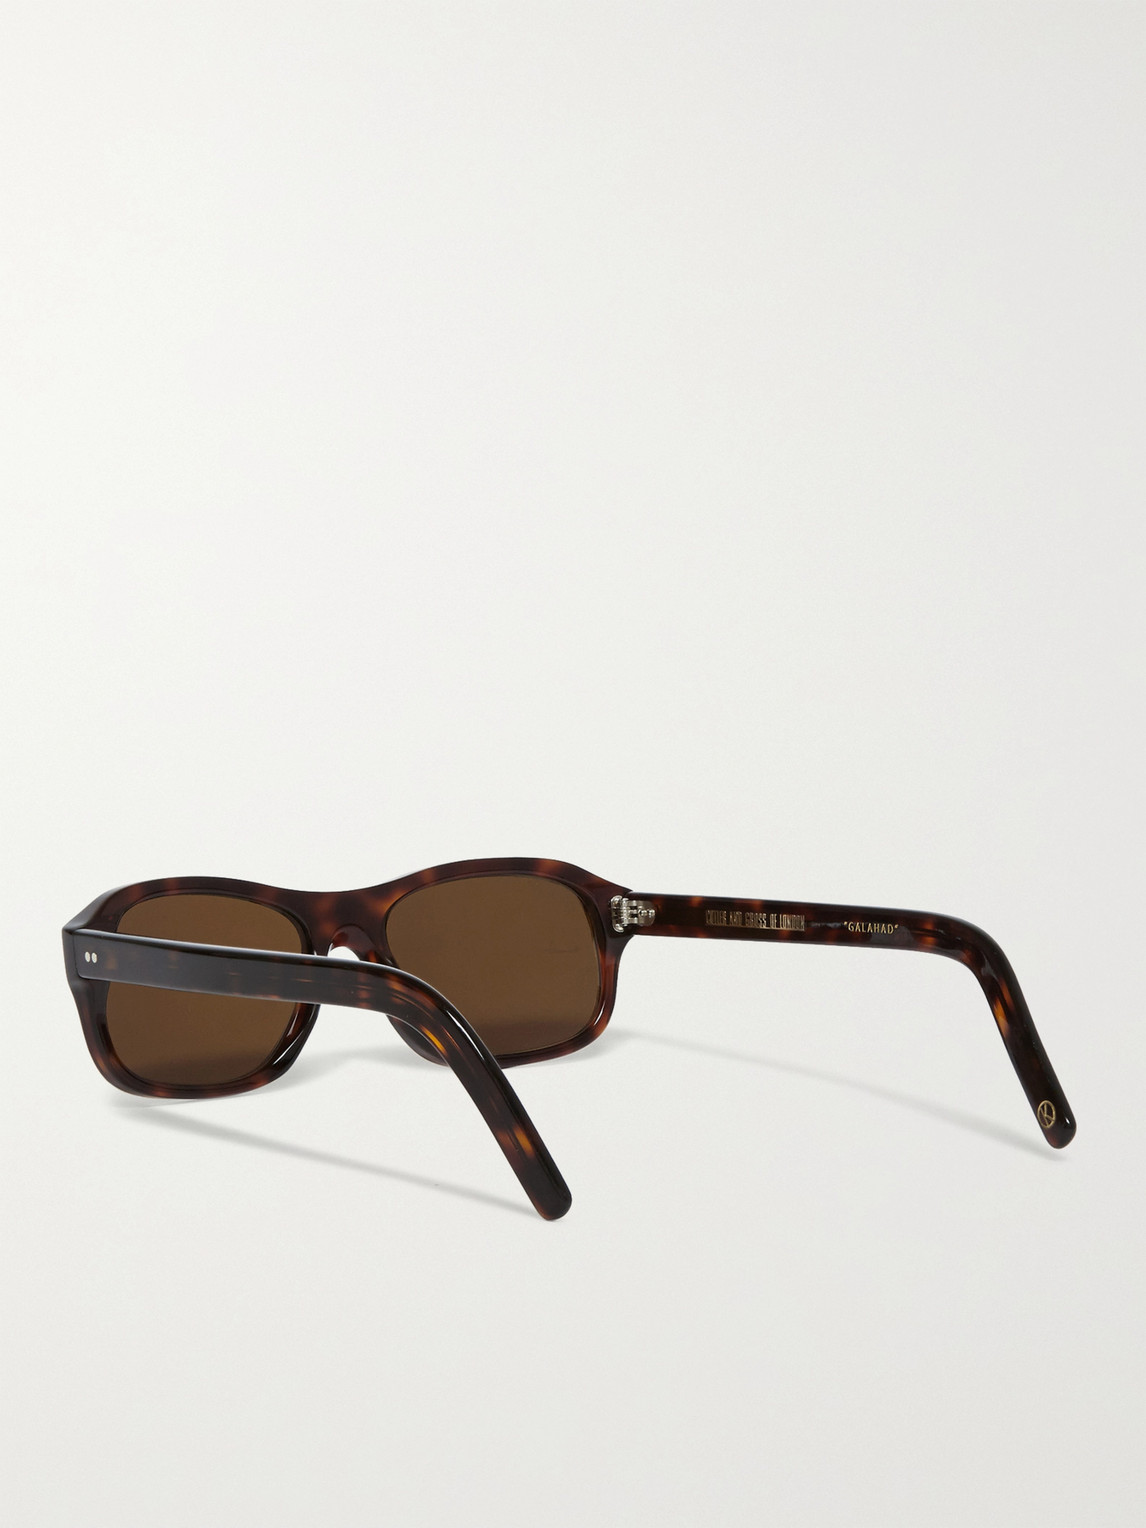 Shop Kingsman Cutler And Gross Square-frame Tortoiseshell Acetate Sunglasses